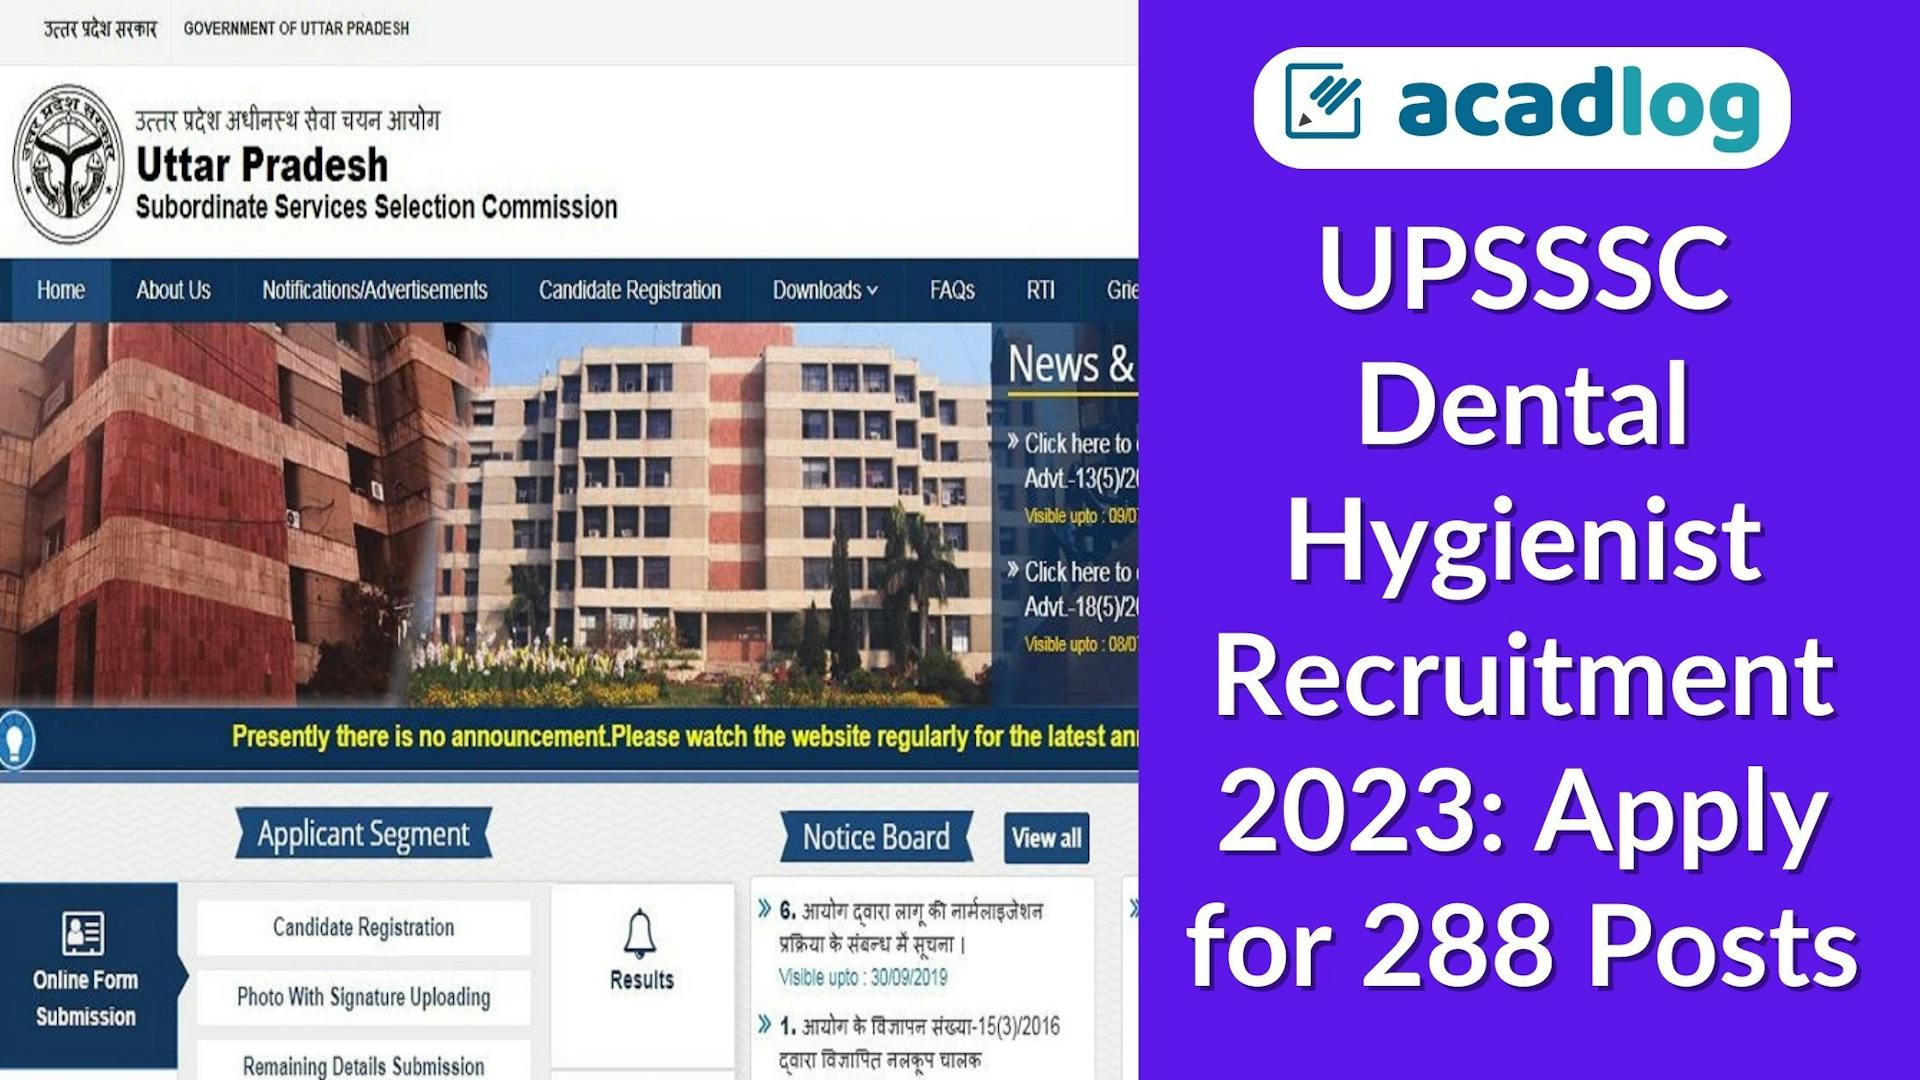 UPSSSC Dental Hygienist Recruitment 2023: Apply for 288 Posts